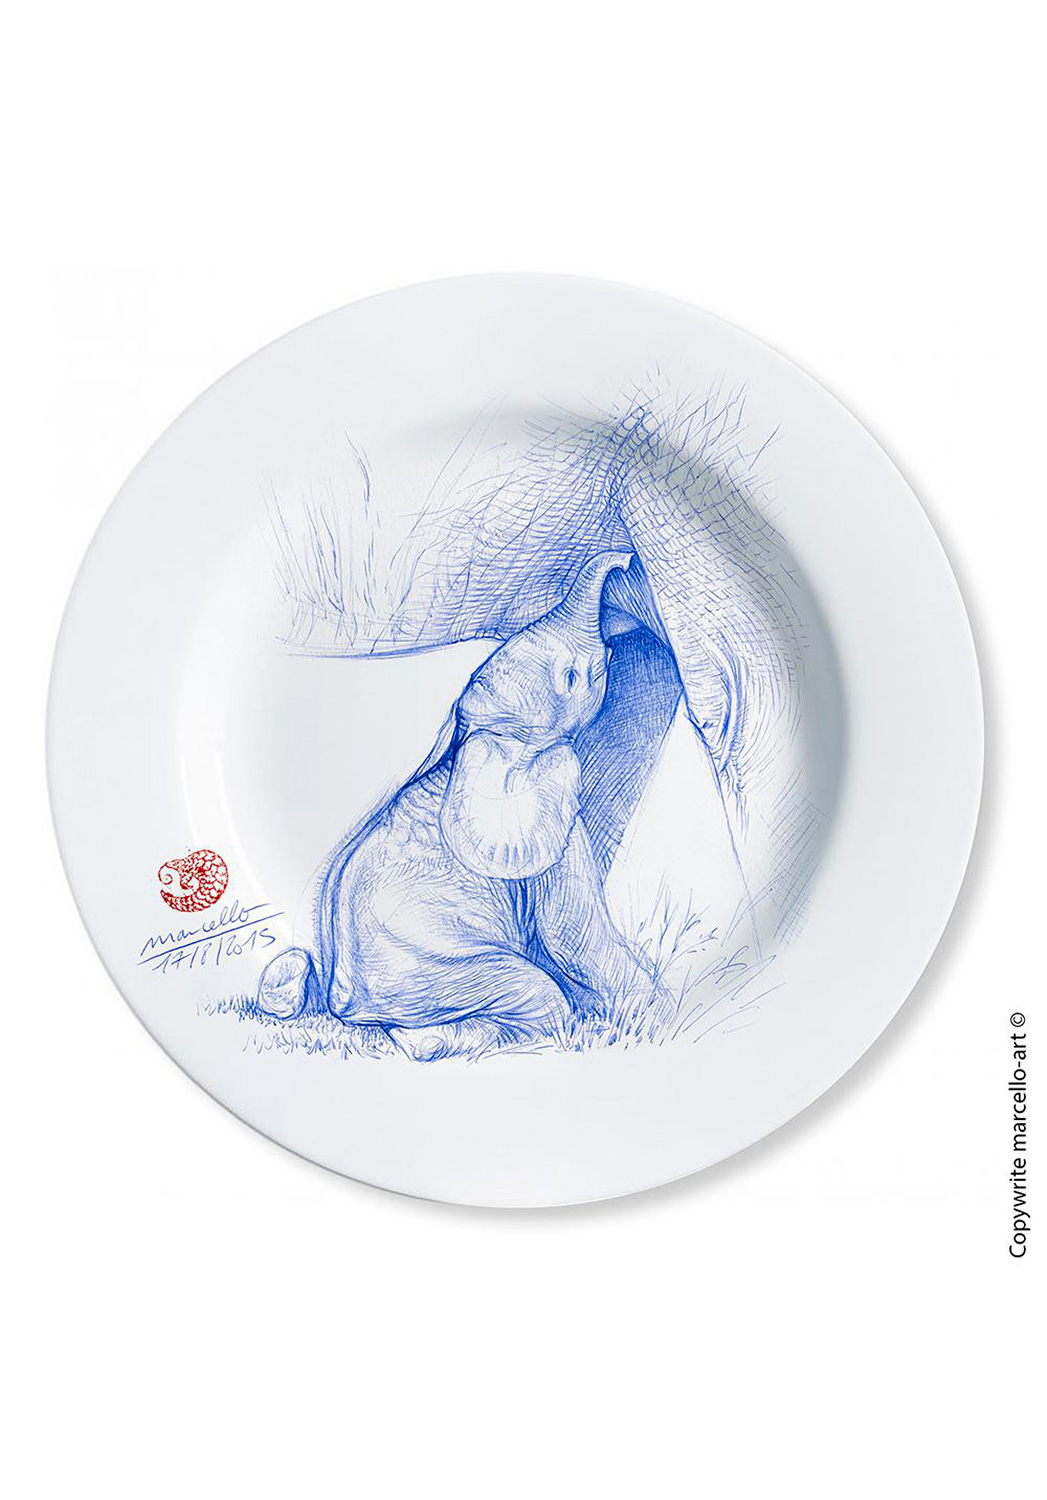 Marcello-art: Decorating Plates Decoration plates 329 Baby elephant ballpoint pen